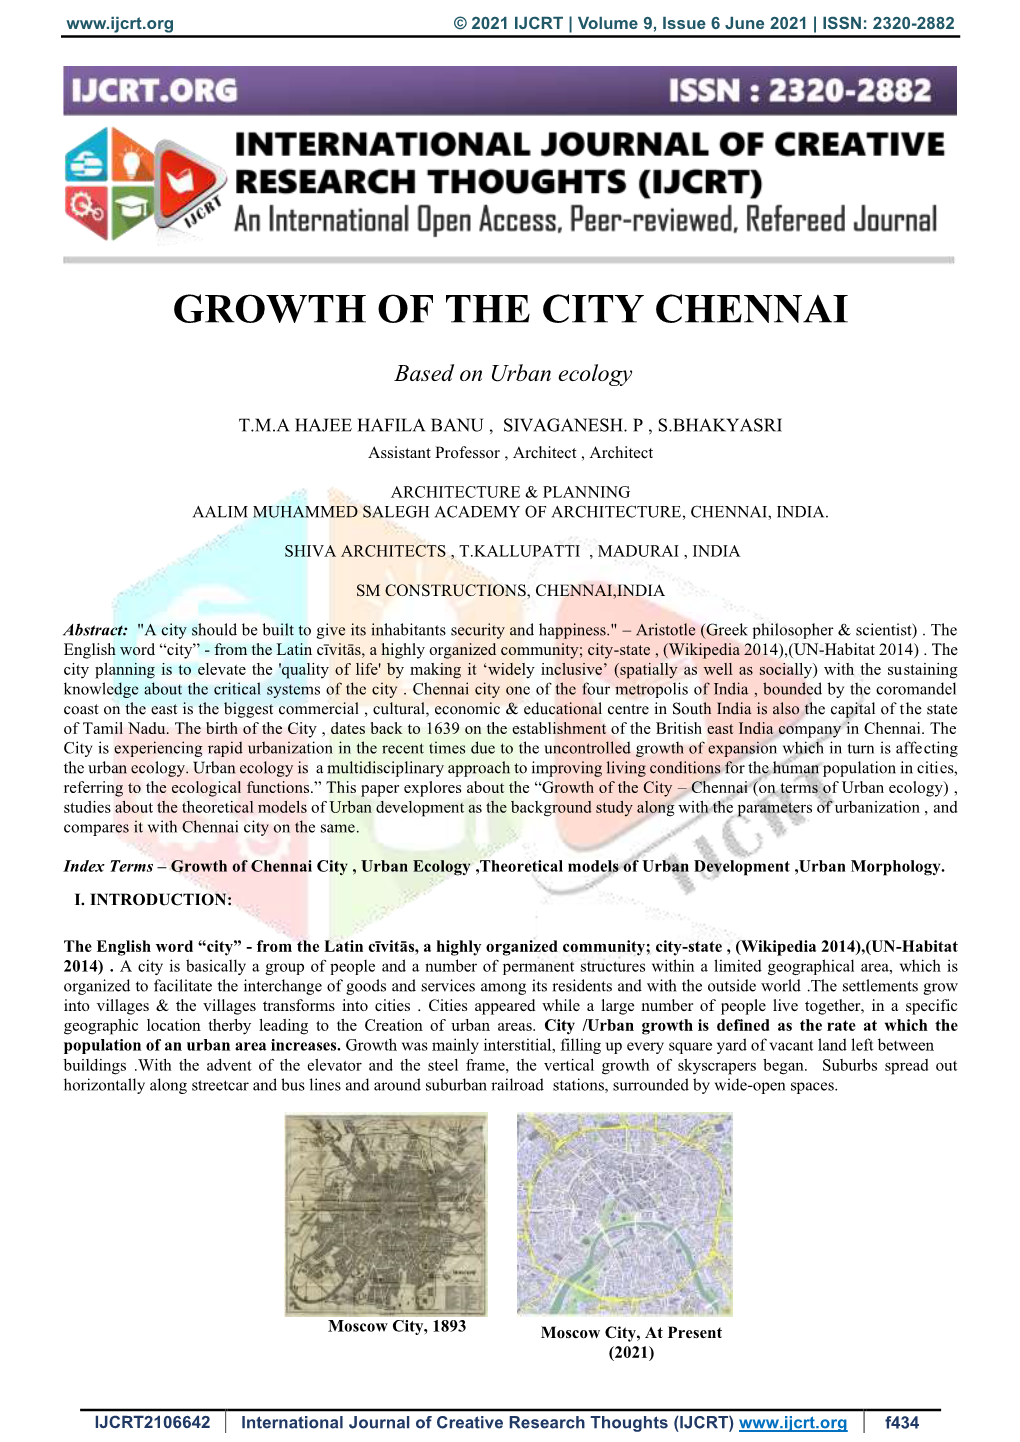 Growth of the City Chennai